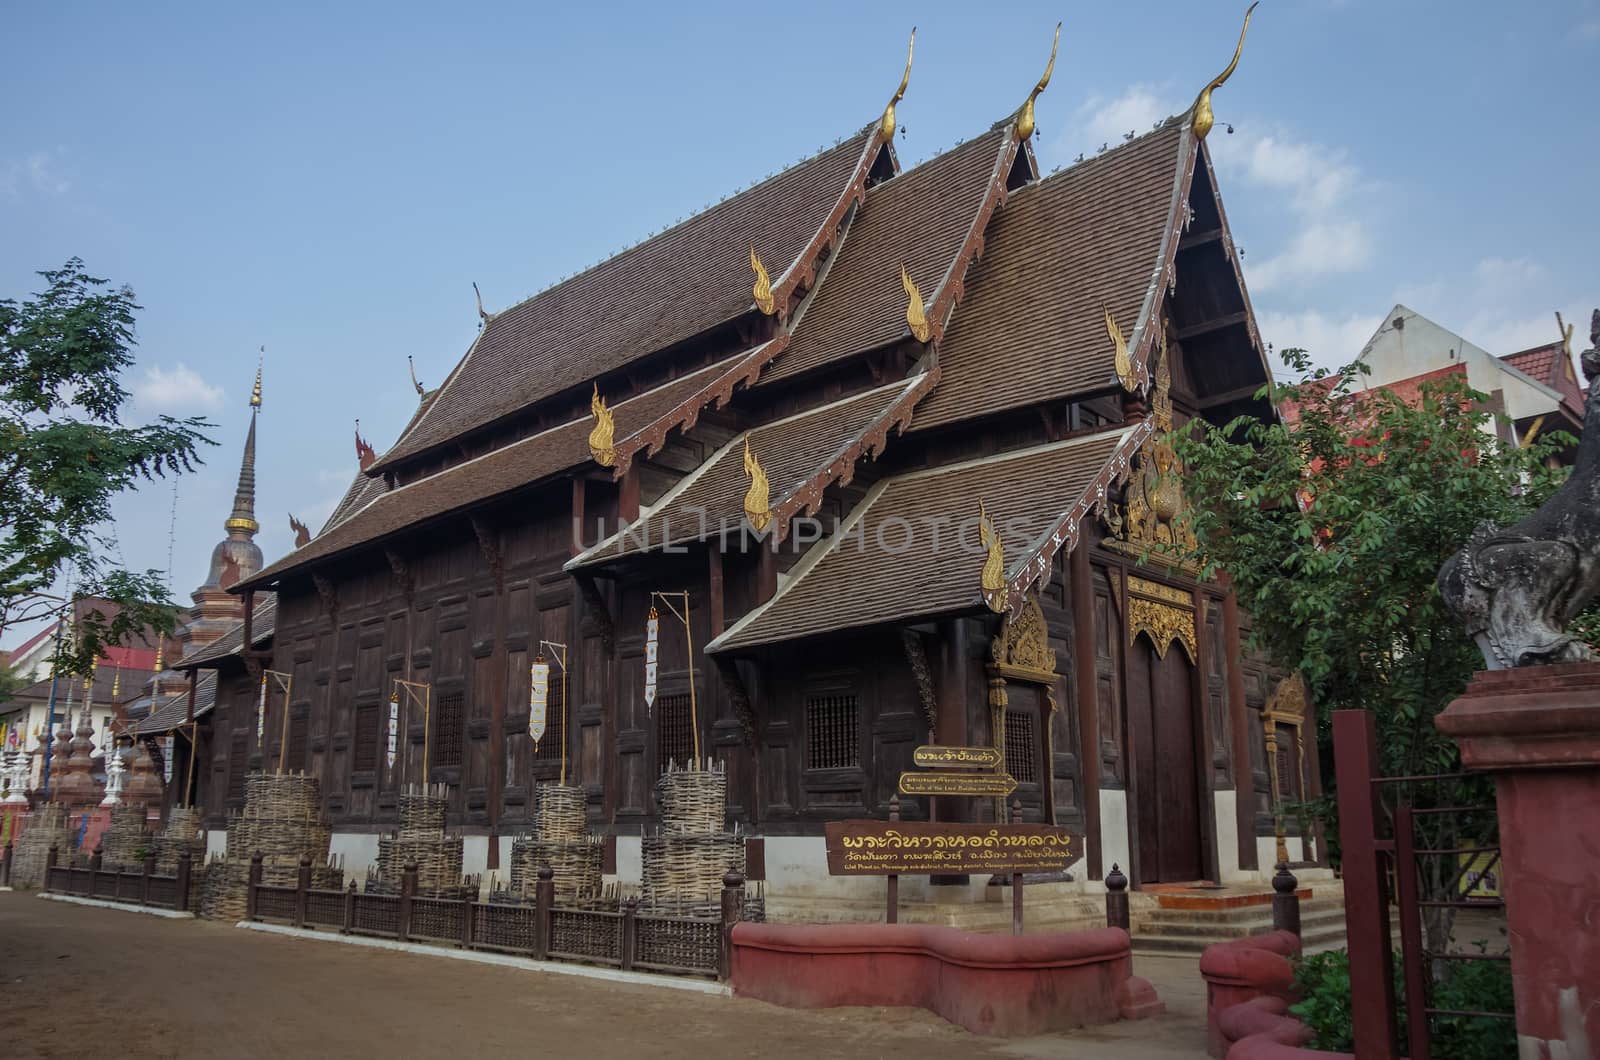 Chiang Mai, Thailand - 30 july 2010: Wooden Wat Pan Tao temple, Chiang Mai, Thailand